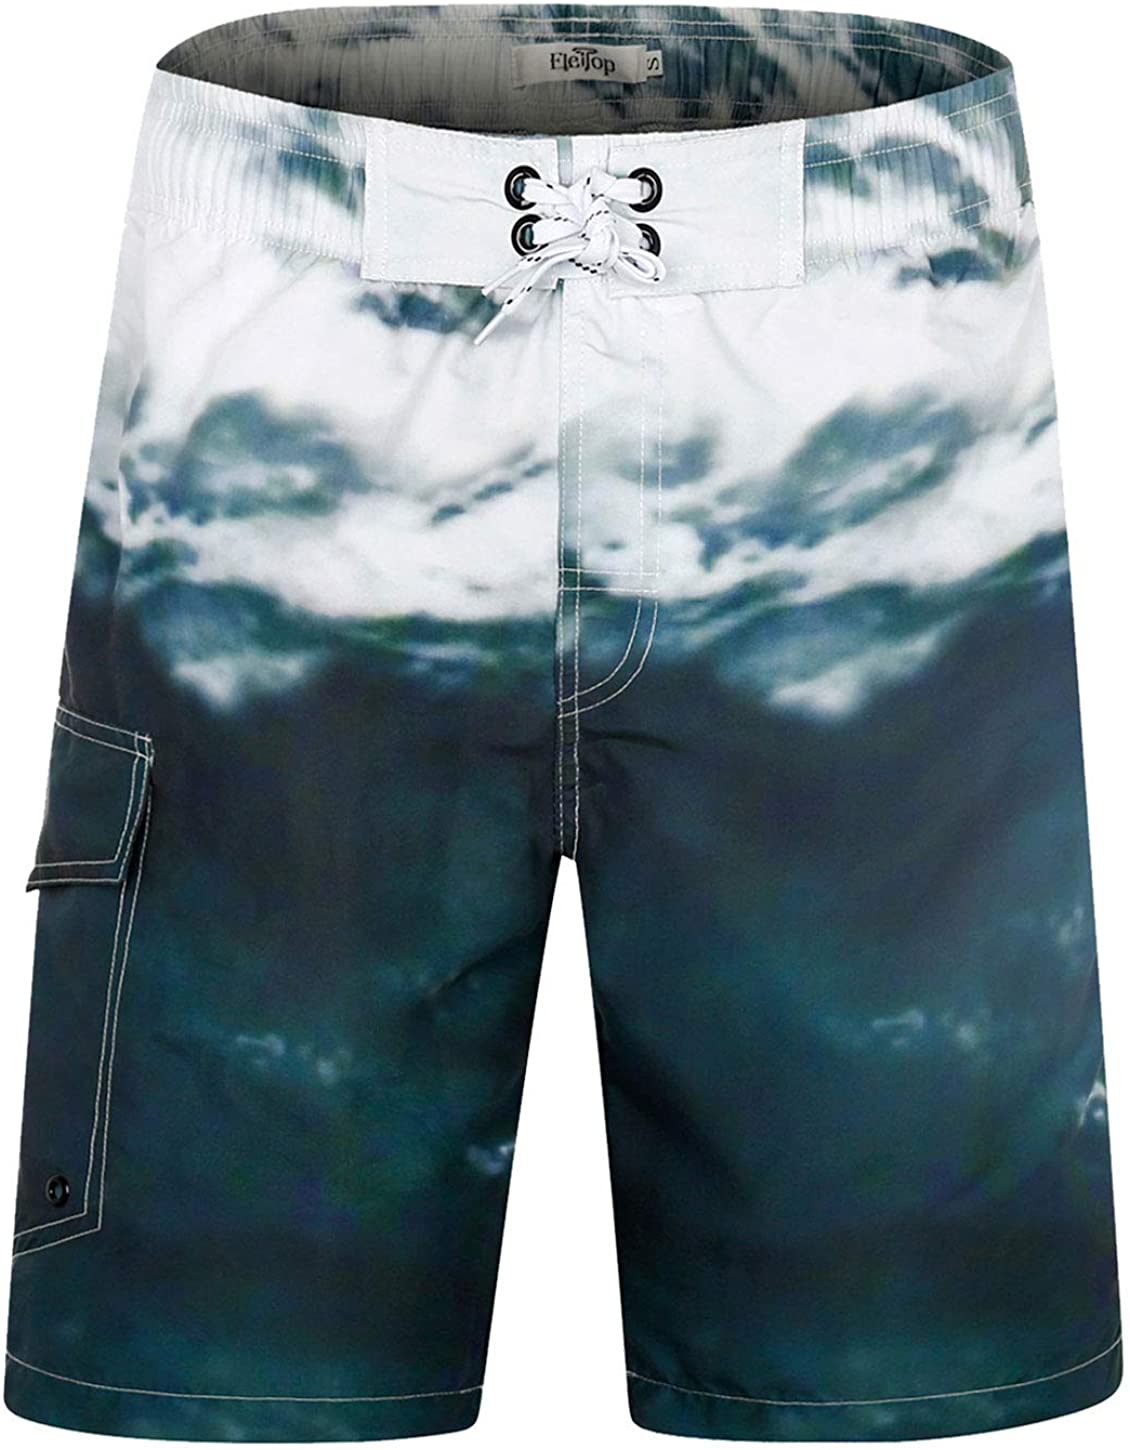 eletop Mens Swim Trunks Quick Dry Board Shorts Beach Holiday Swimwear Print Bathing Suit 